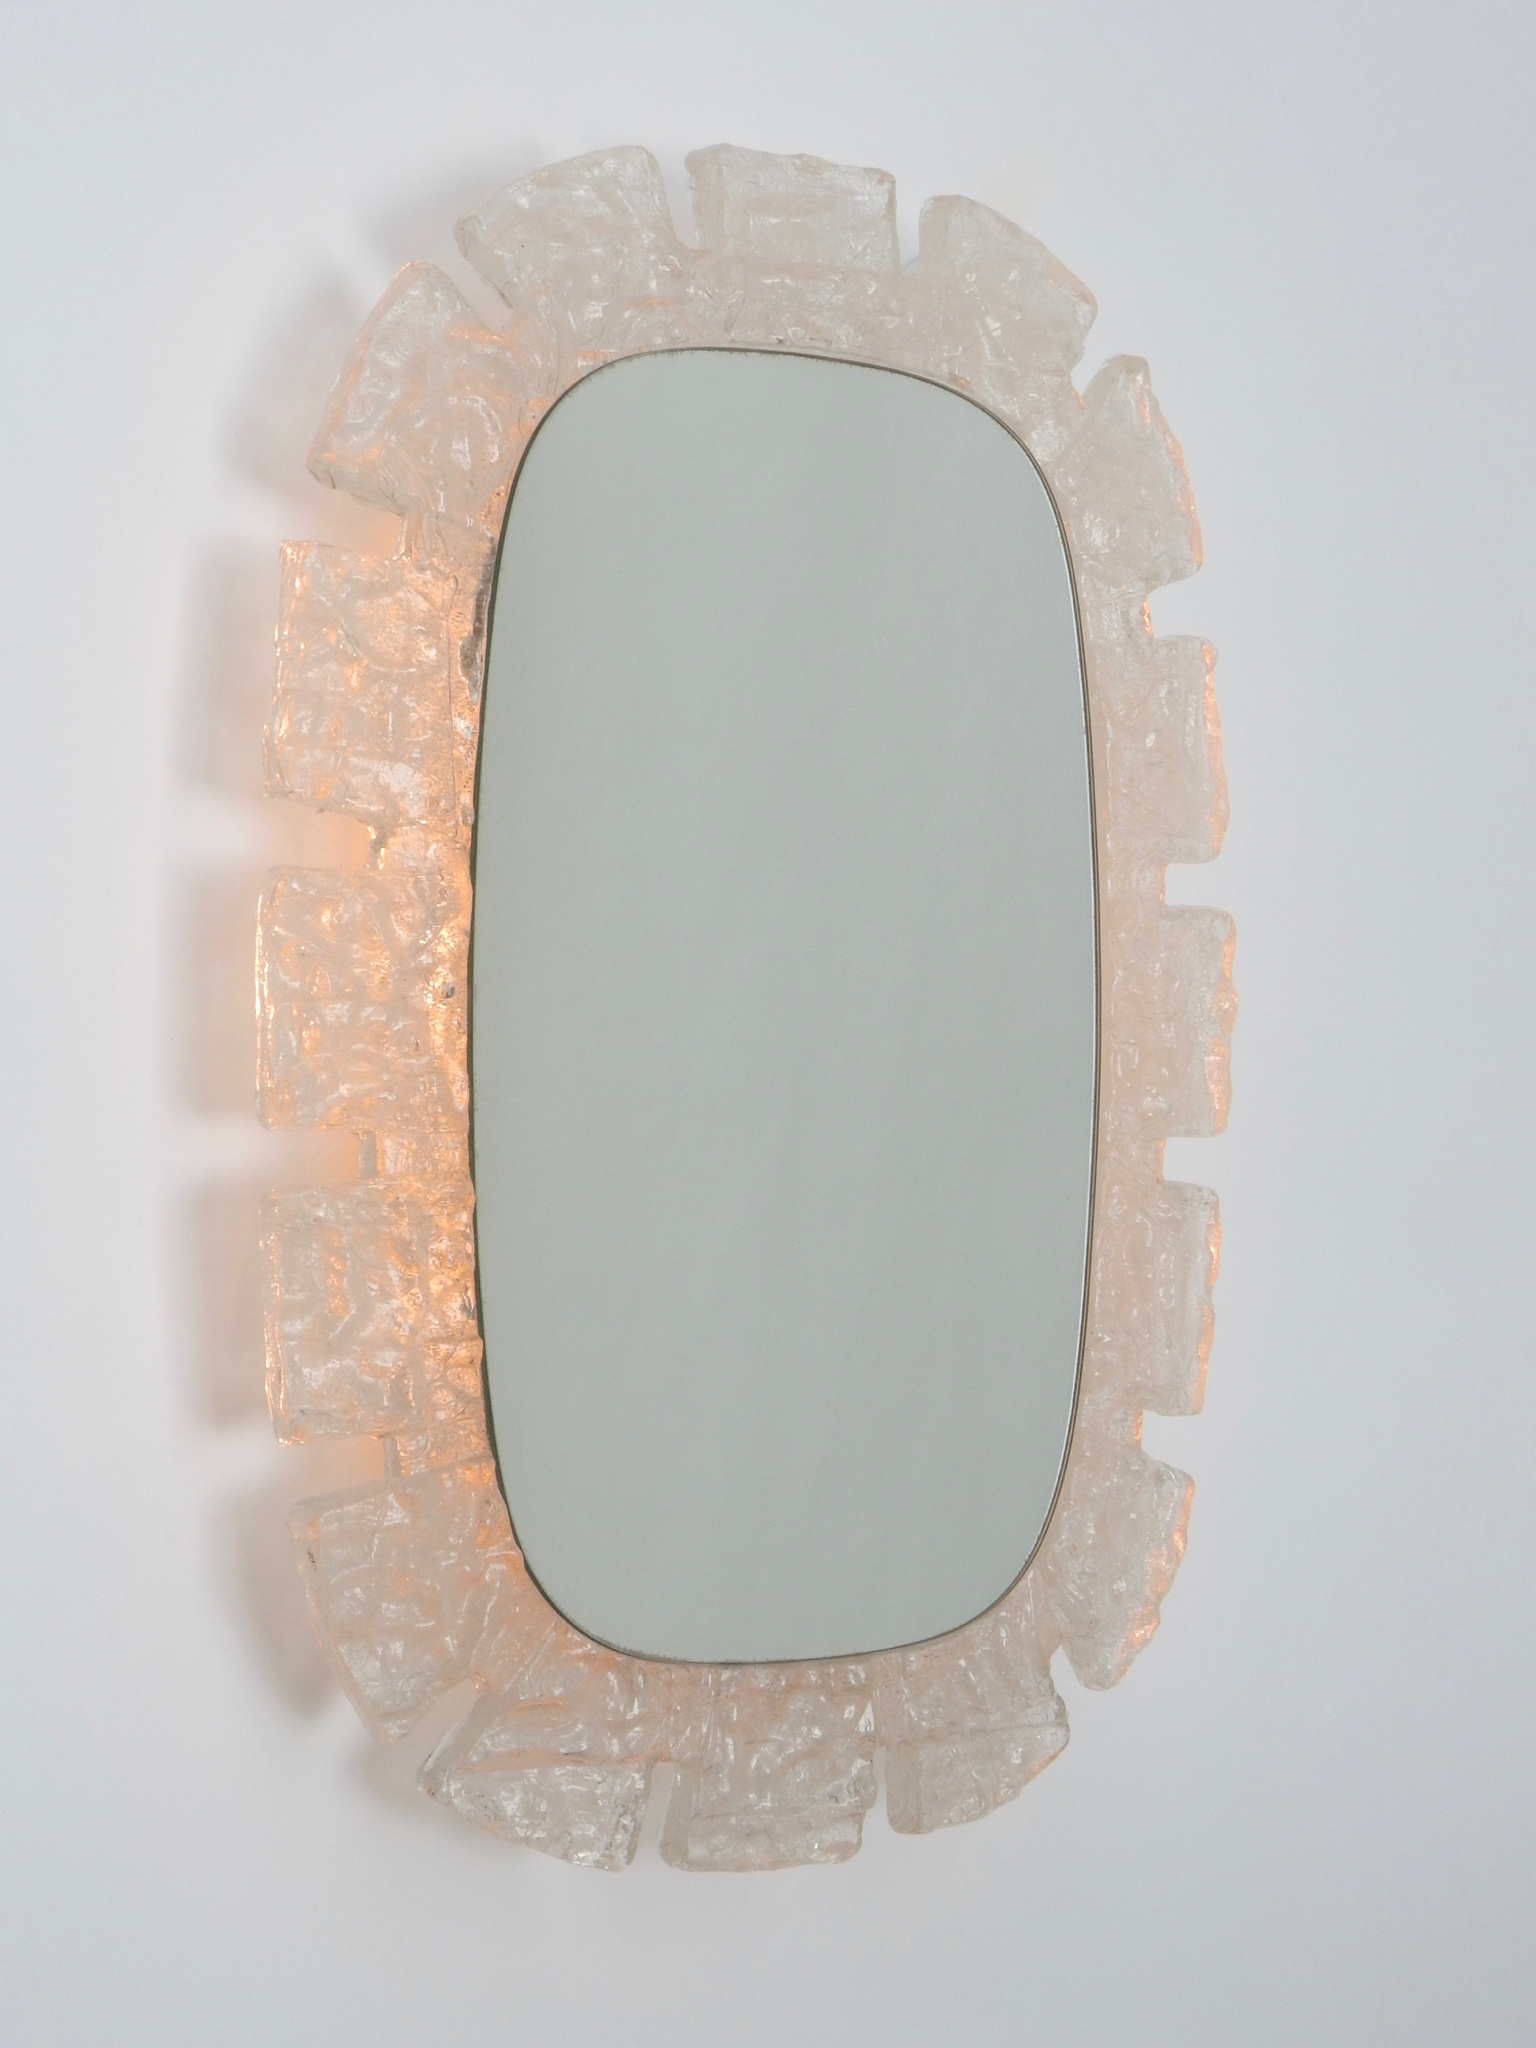 Sold - Illuminated Wall Mirror